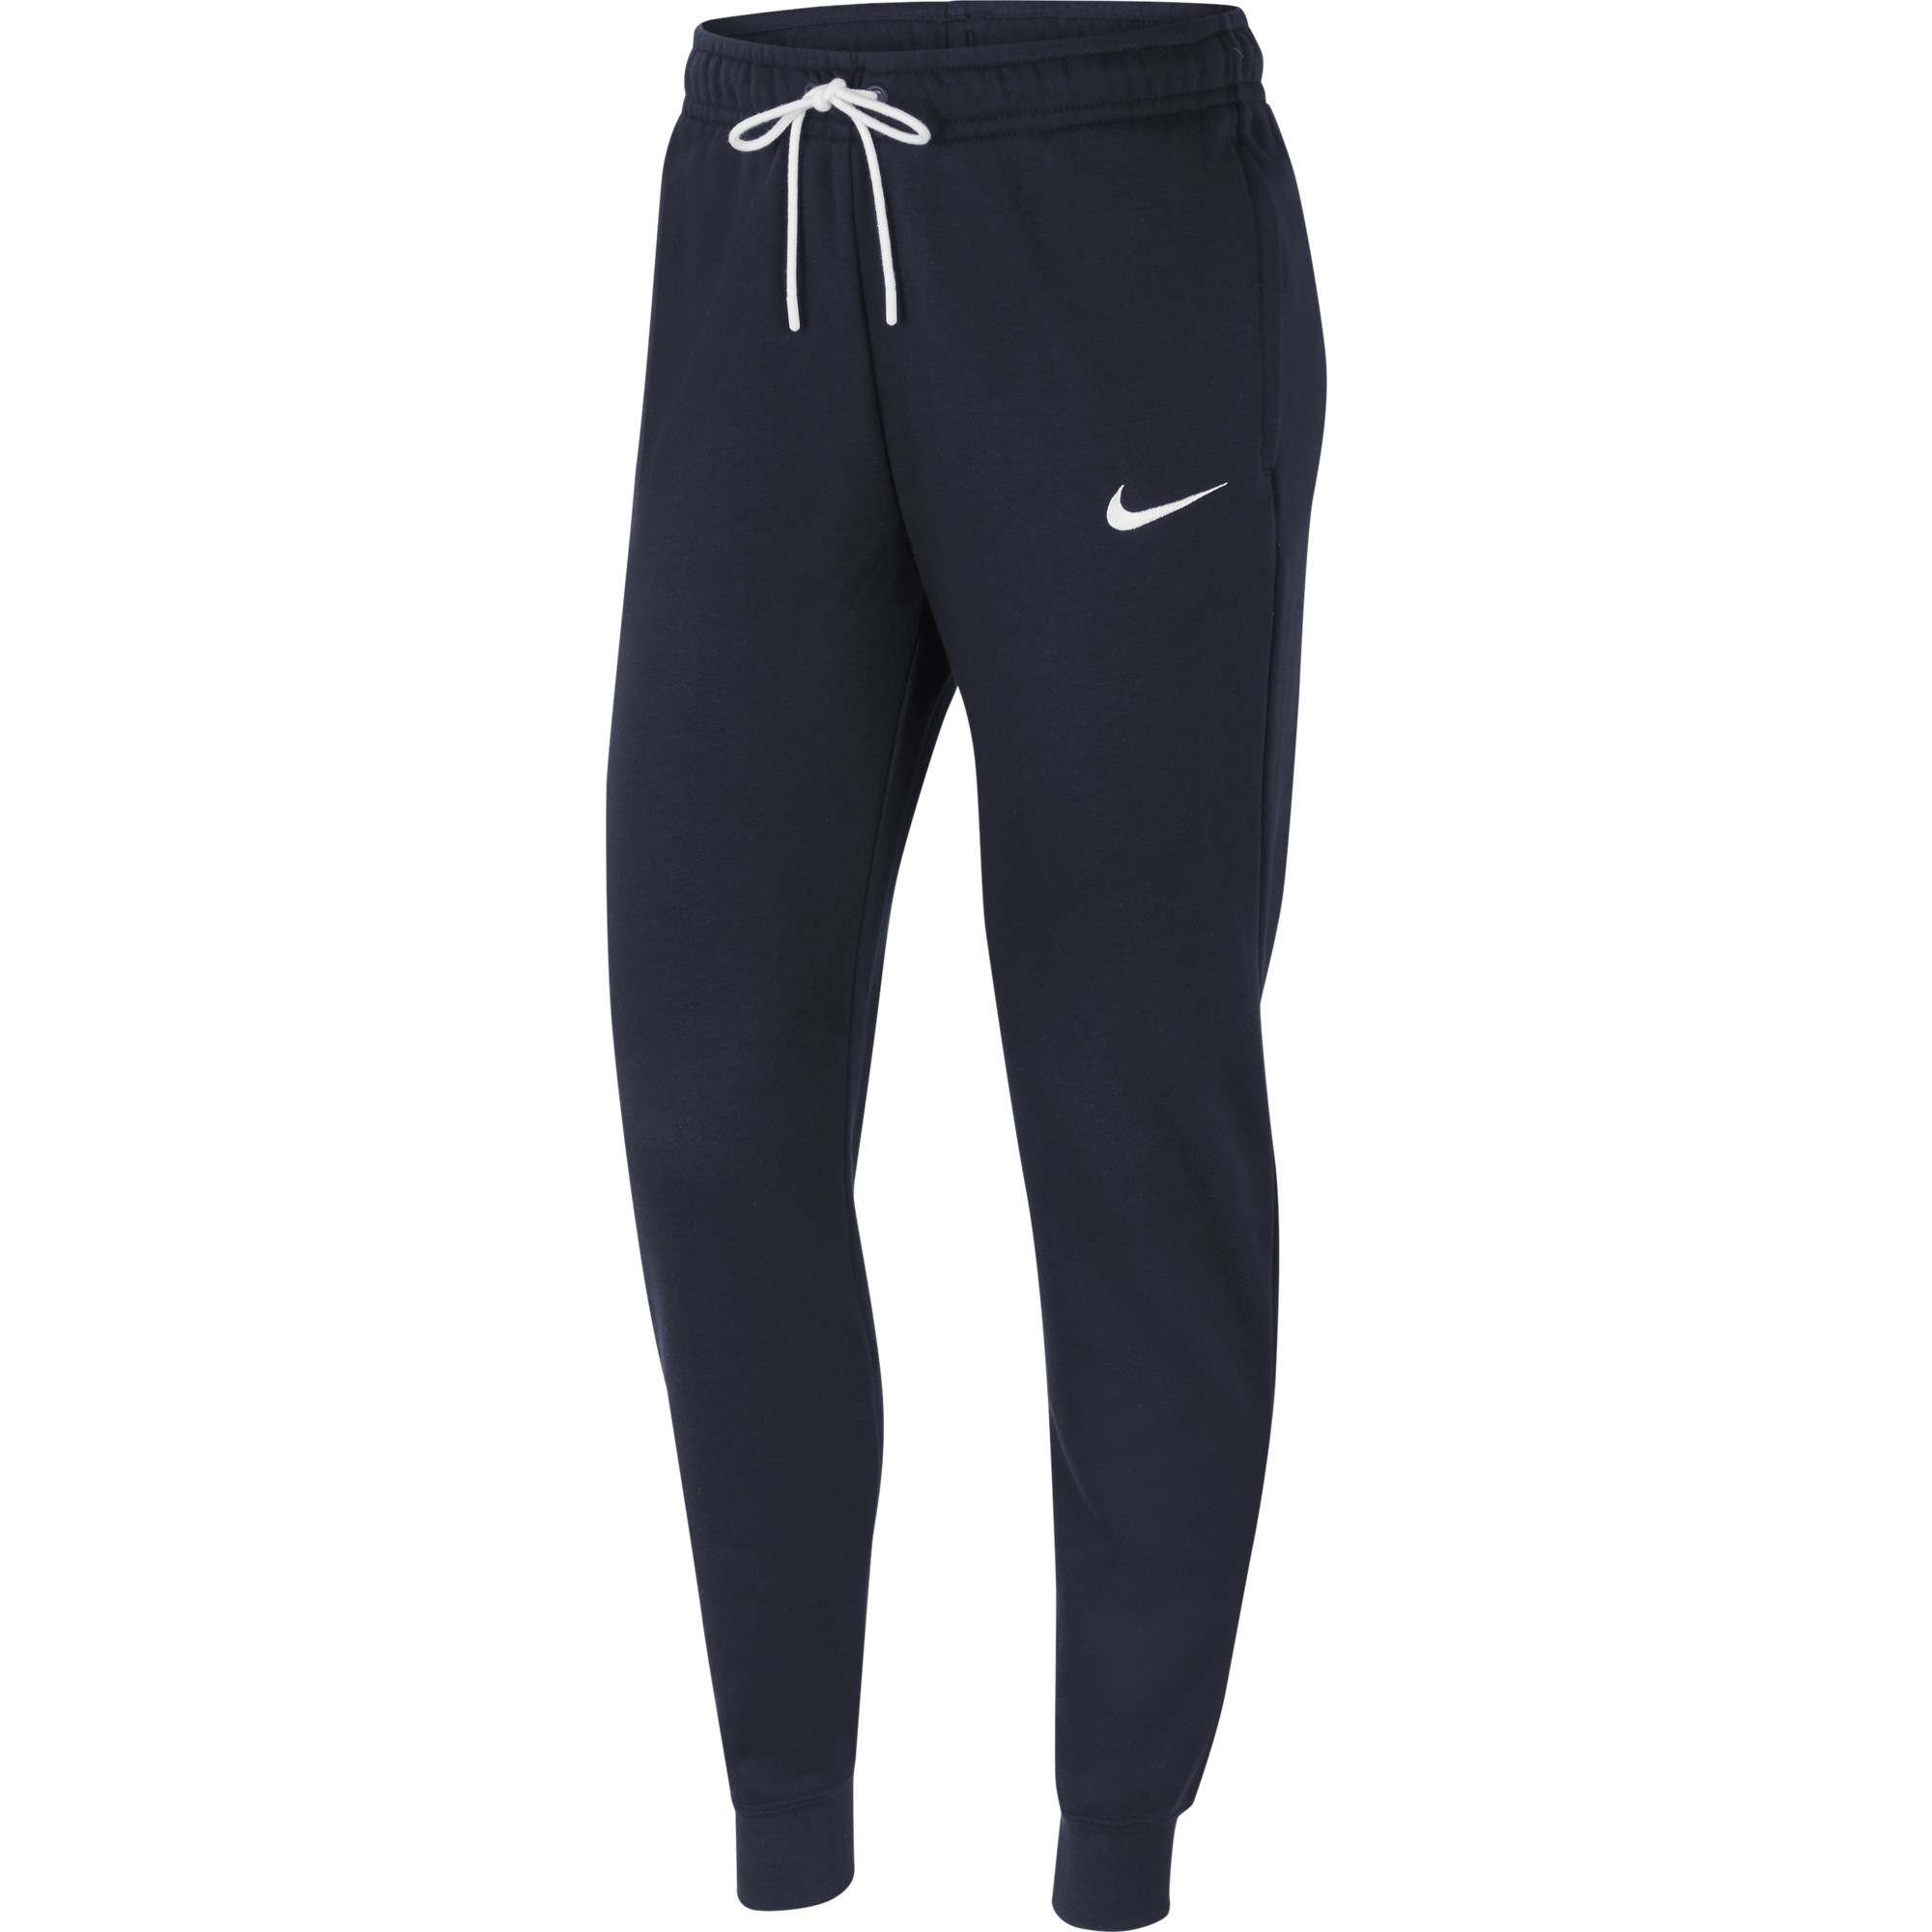 3Q Sports - Nike Womens Fleece Park 20 Pant